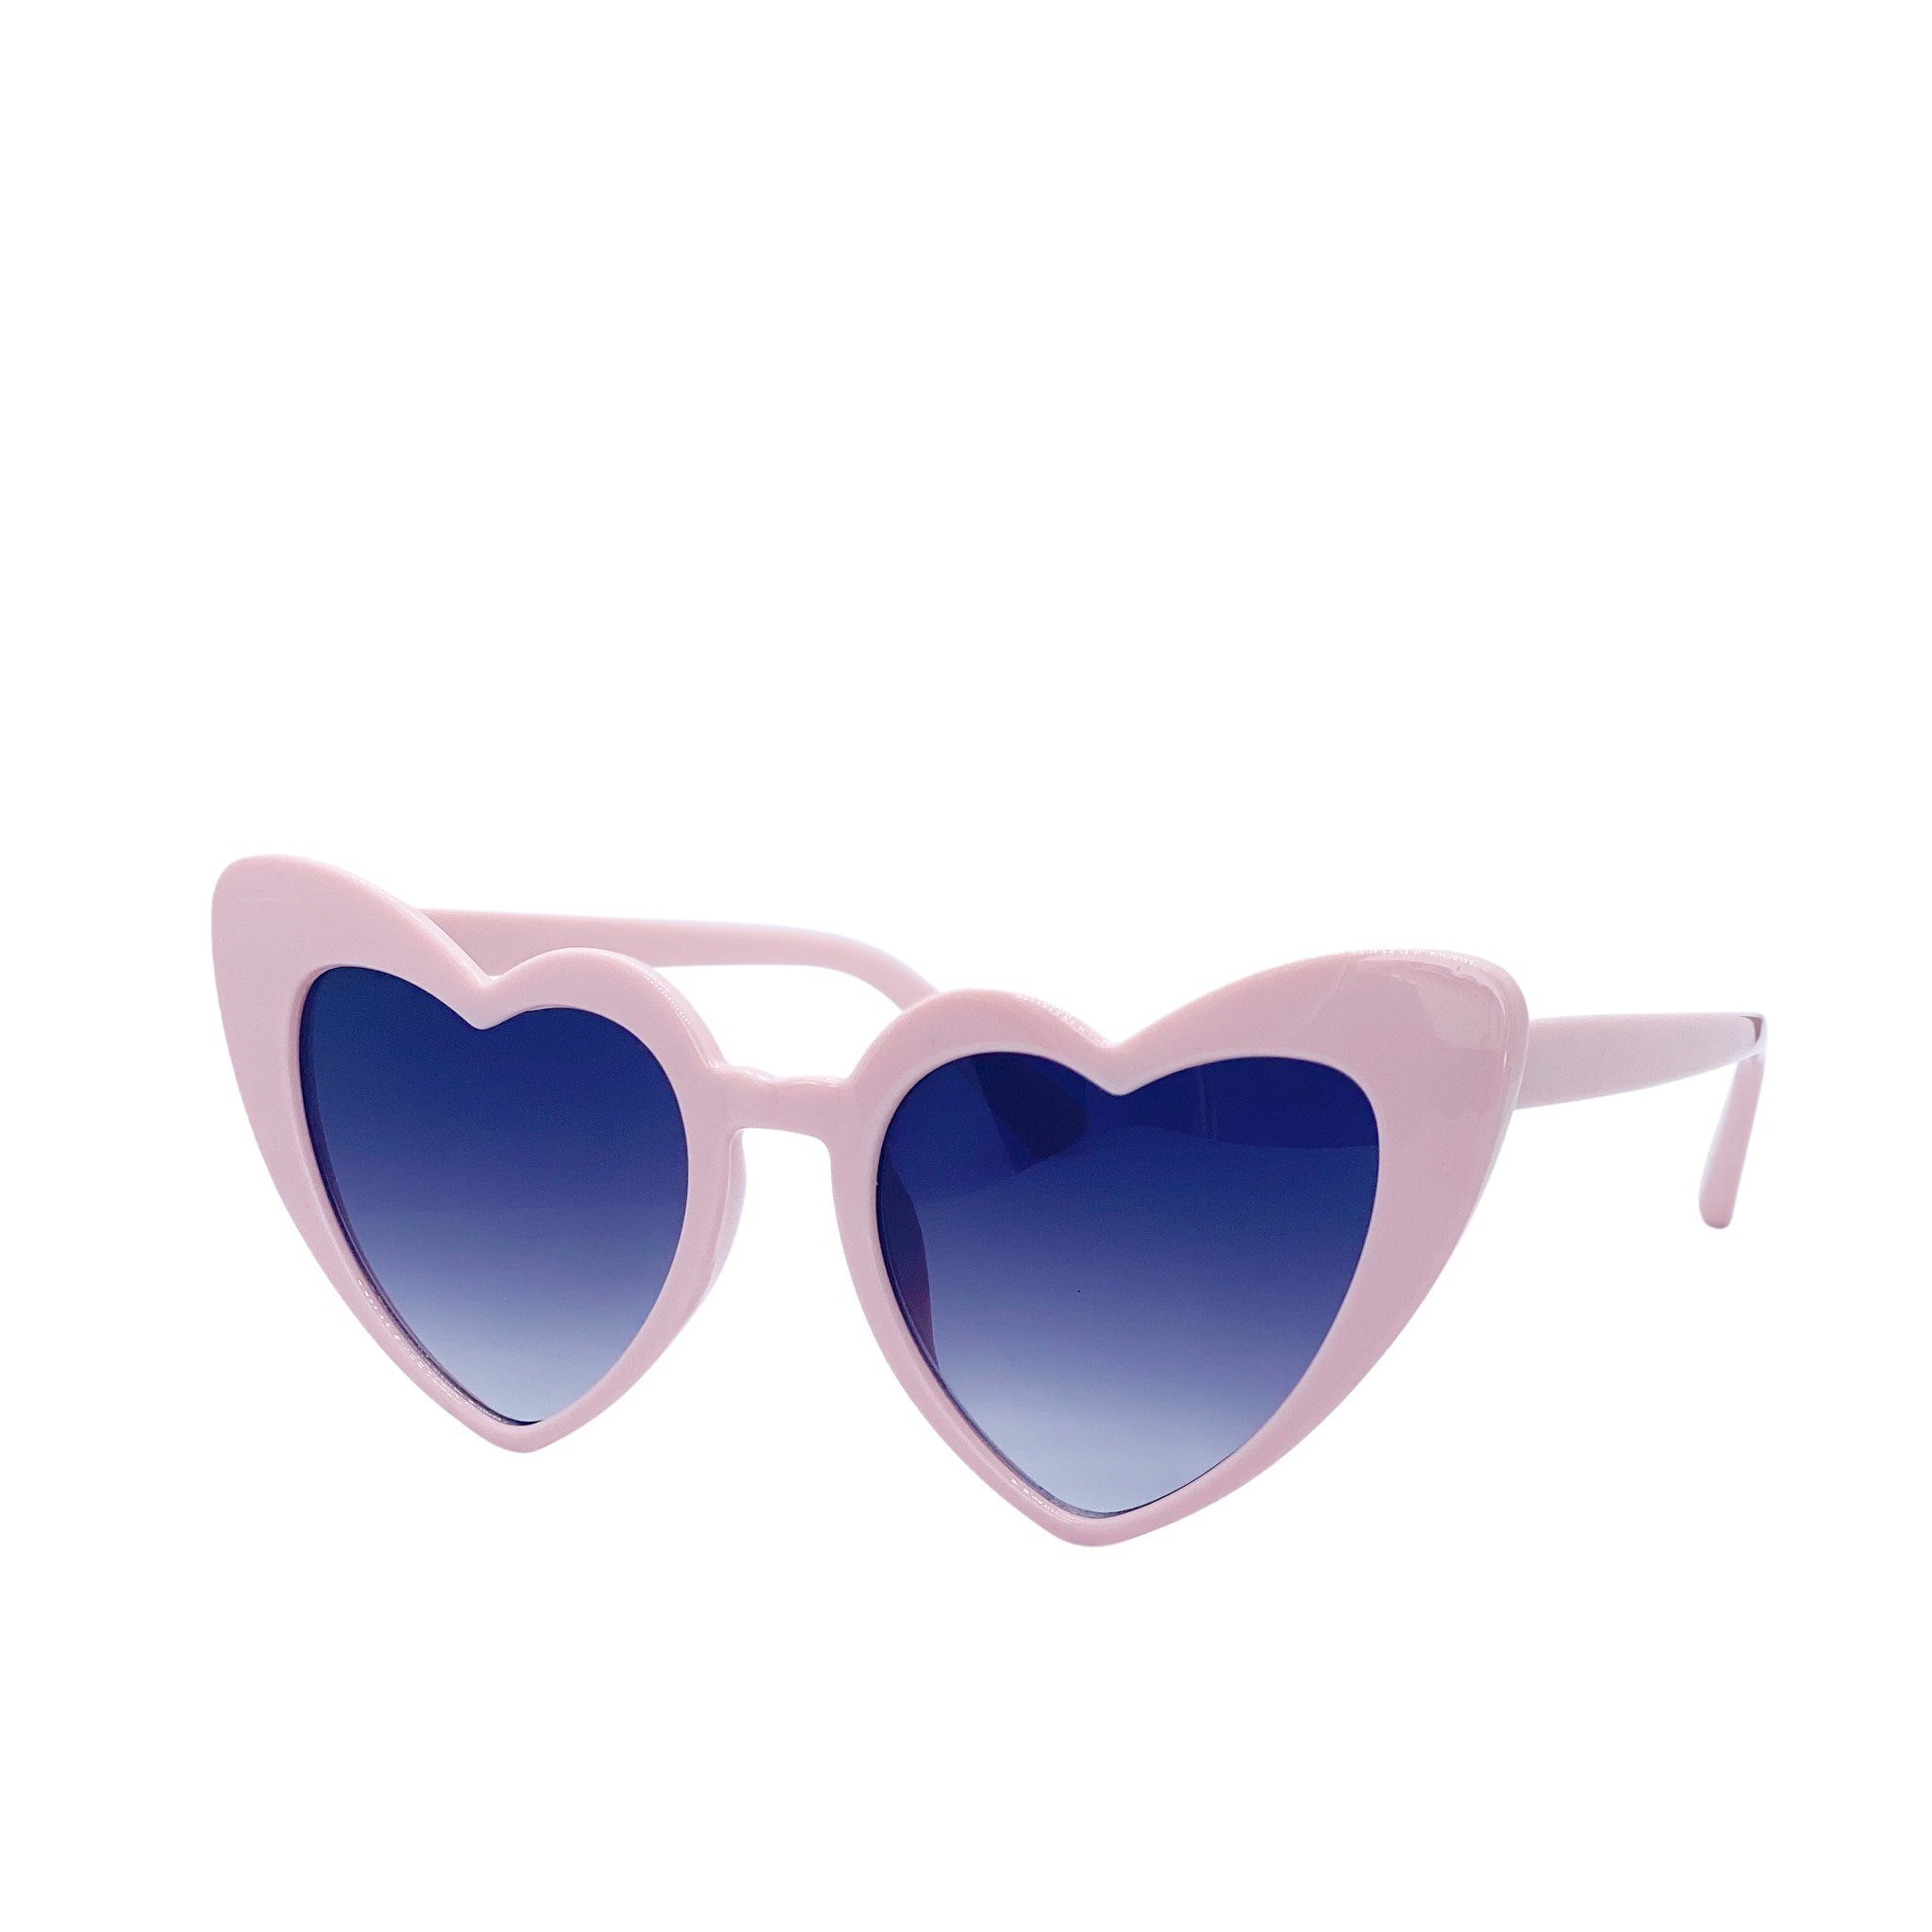 Herzform rosa Sonnenbrille in shopandmarry Sonnenbrille